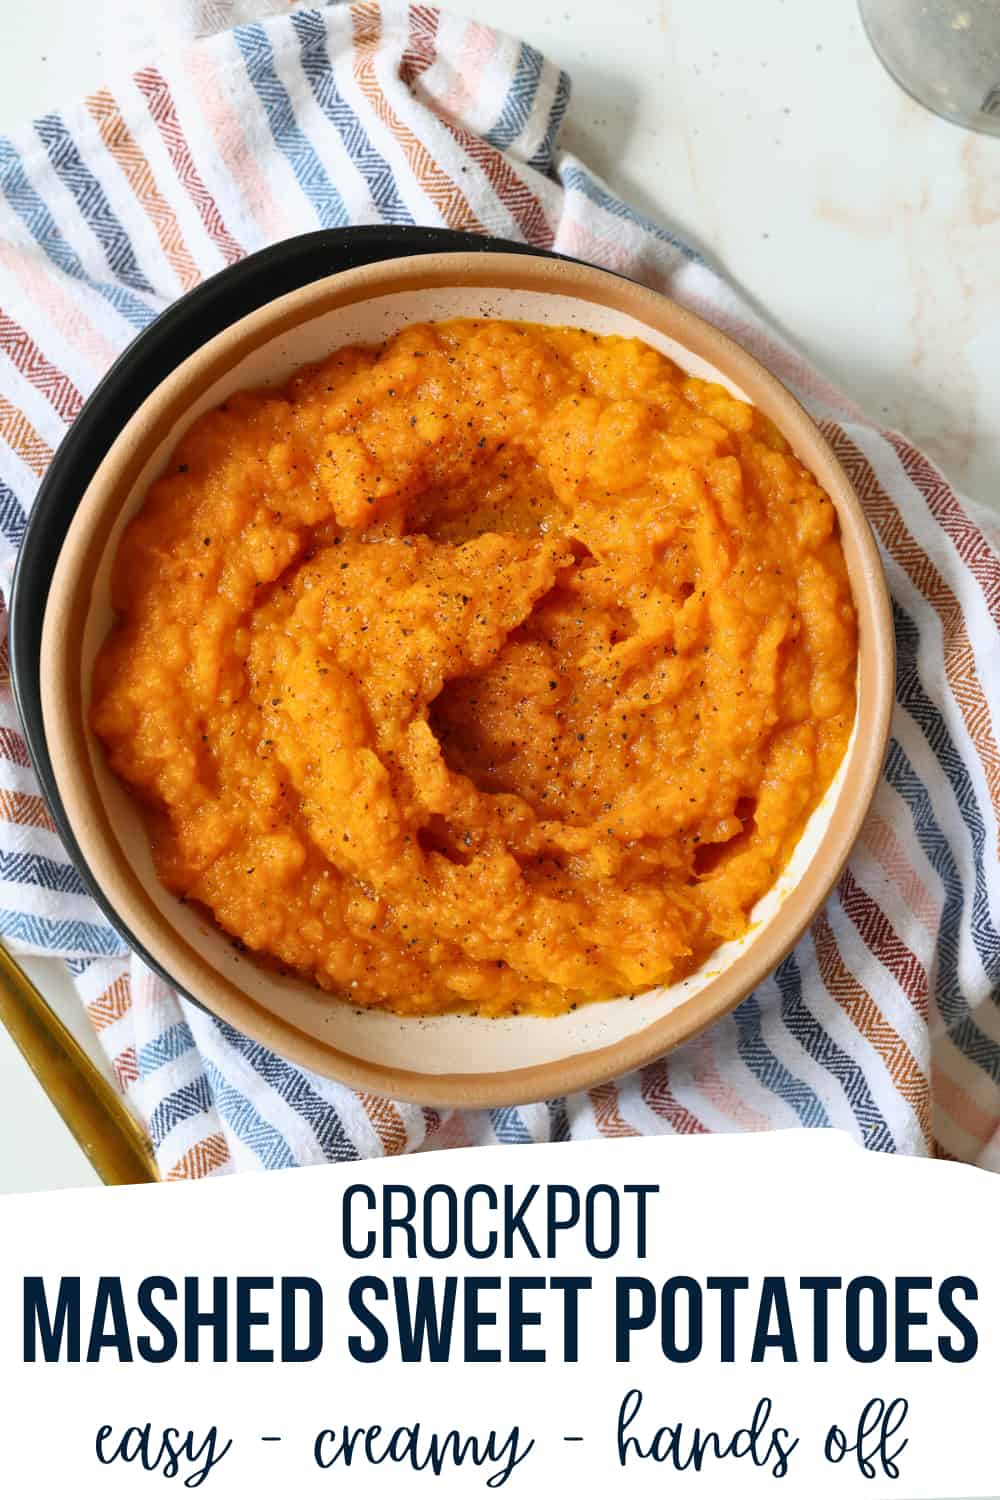 Crockpot Mashed Sweet Potatoes – Tasty Oven